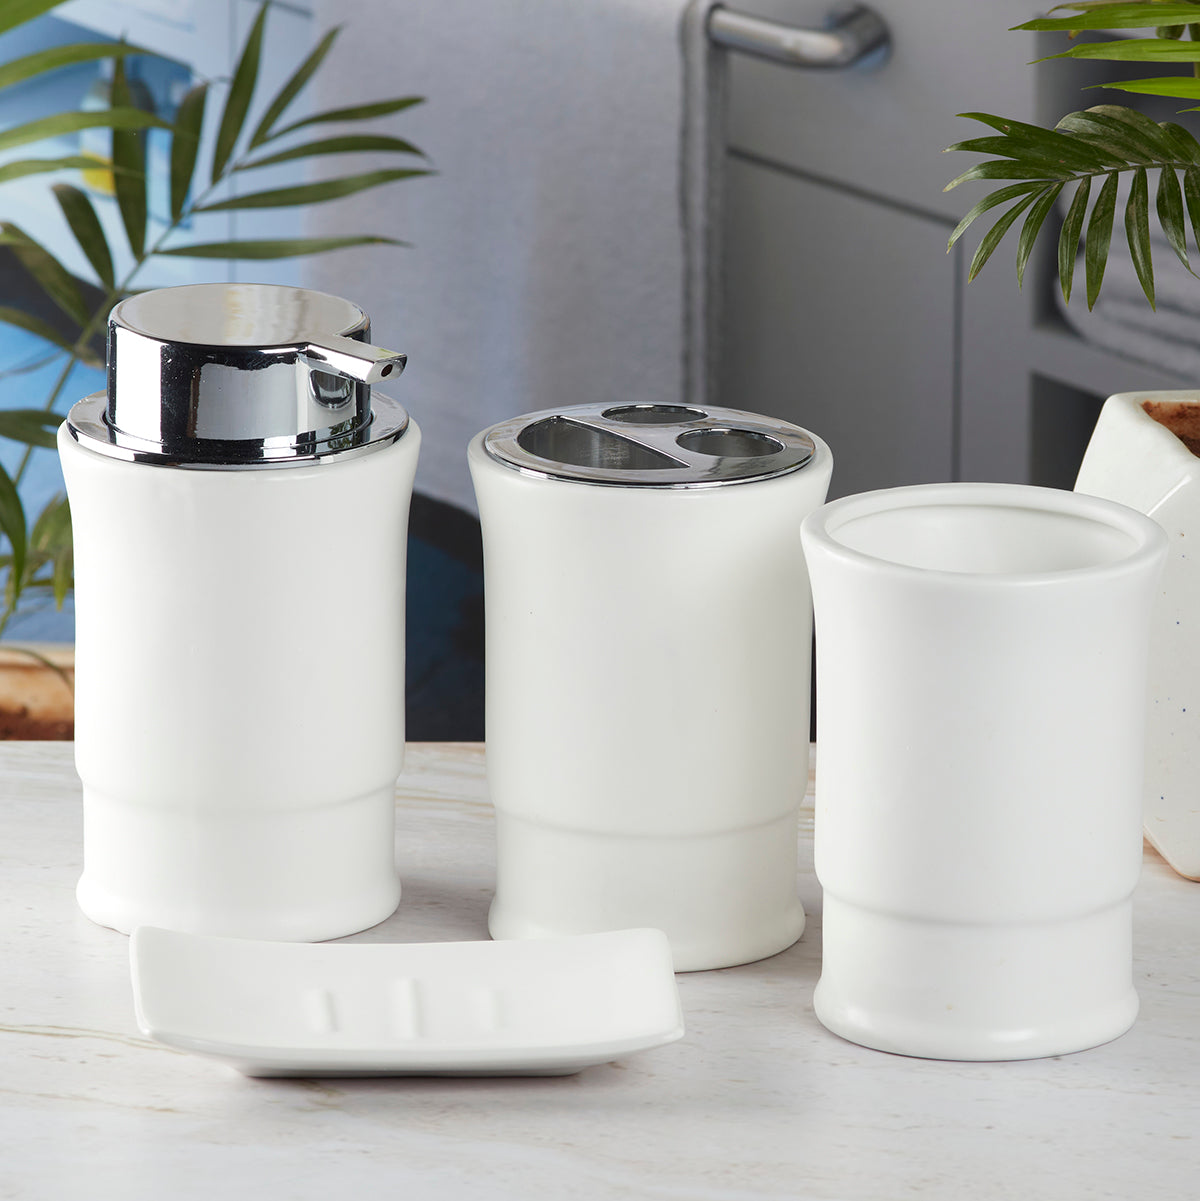 Ceramic Bathroom Accessories Set of 4 Bath Set with Soap Dispenser (8245)